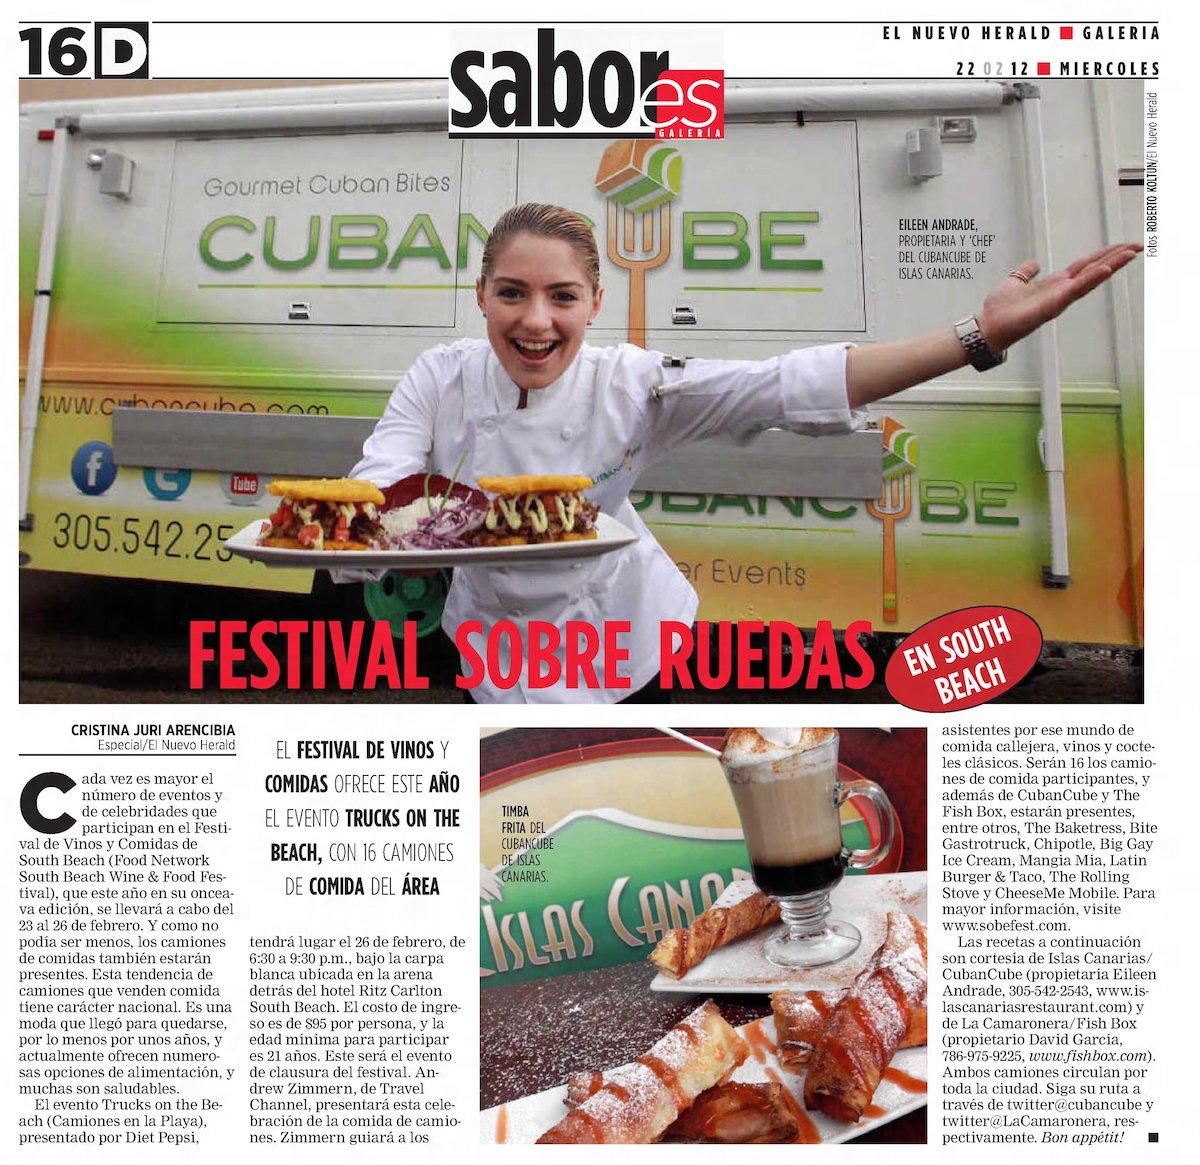 SoBe Food Trucks on the Beach - El Nuevo Herald 2-22-12